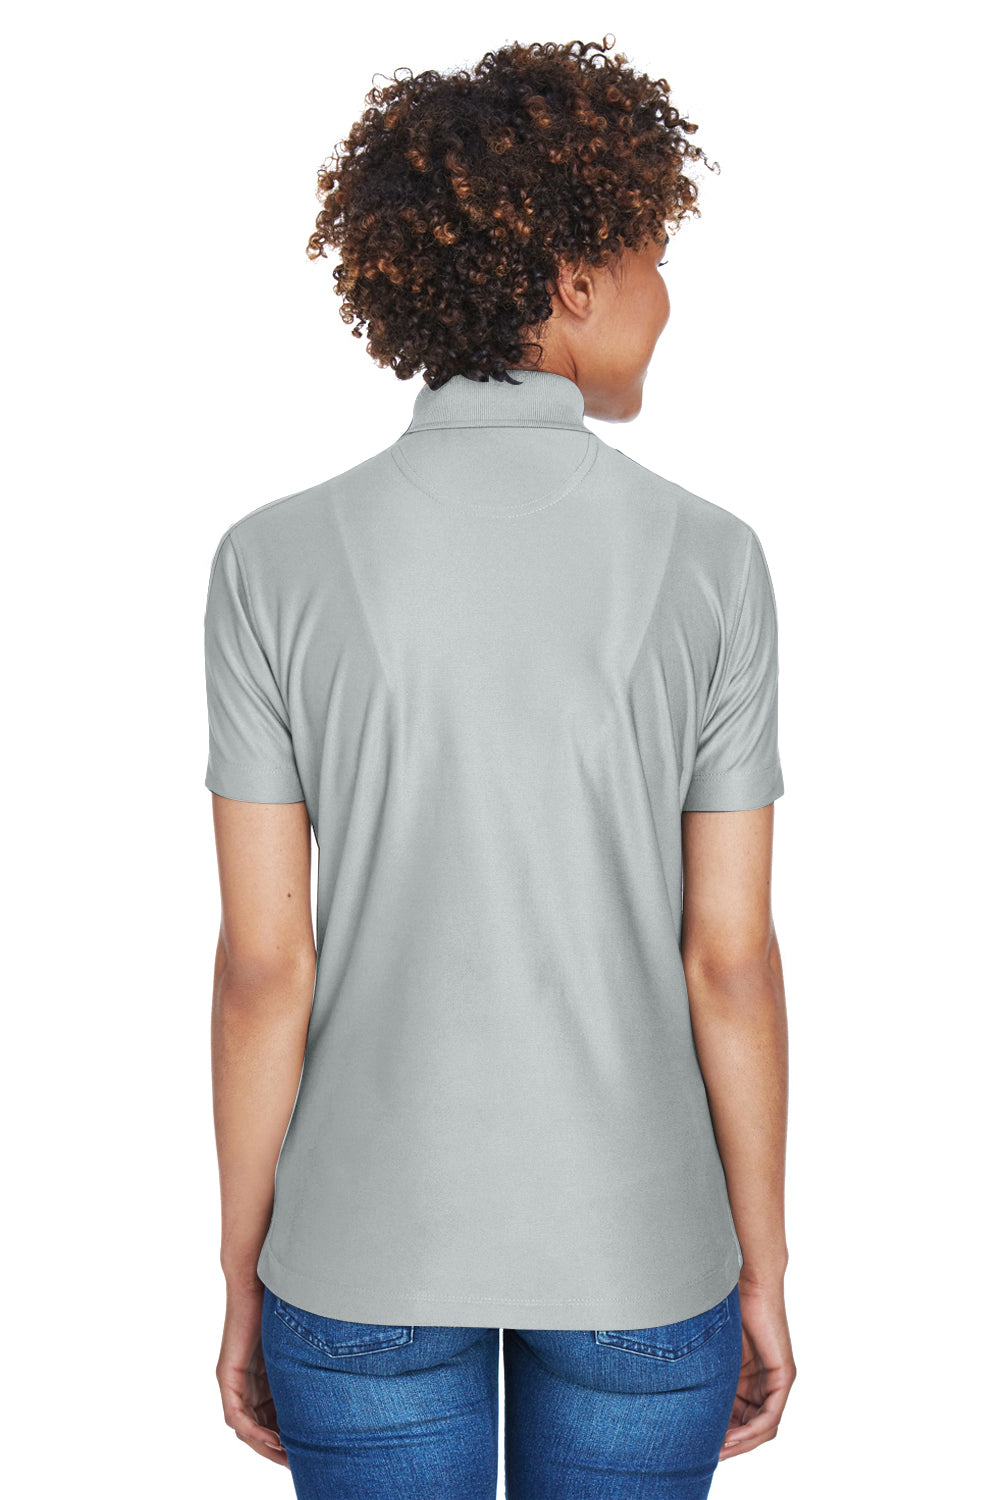 UltraClub 8414 Womens Cool & Dry Elite Performance Moisture Wicking Short Sleeve Polo Shirt Grey Back